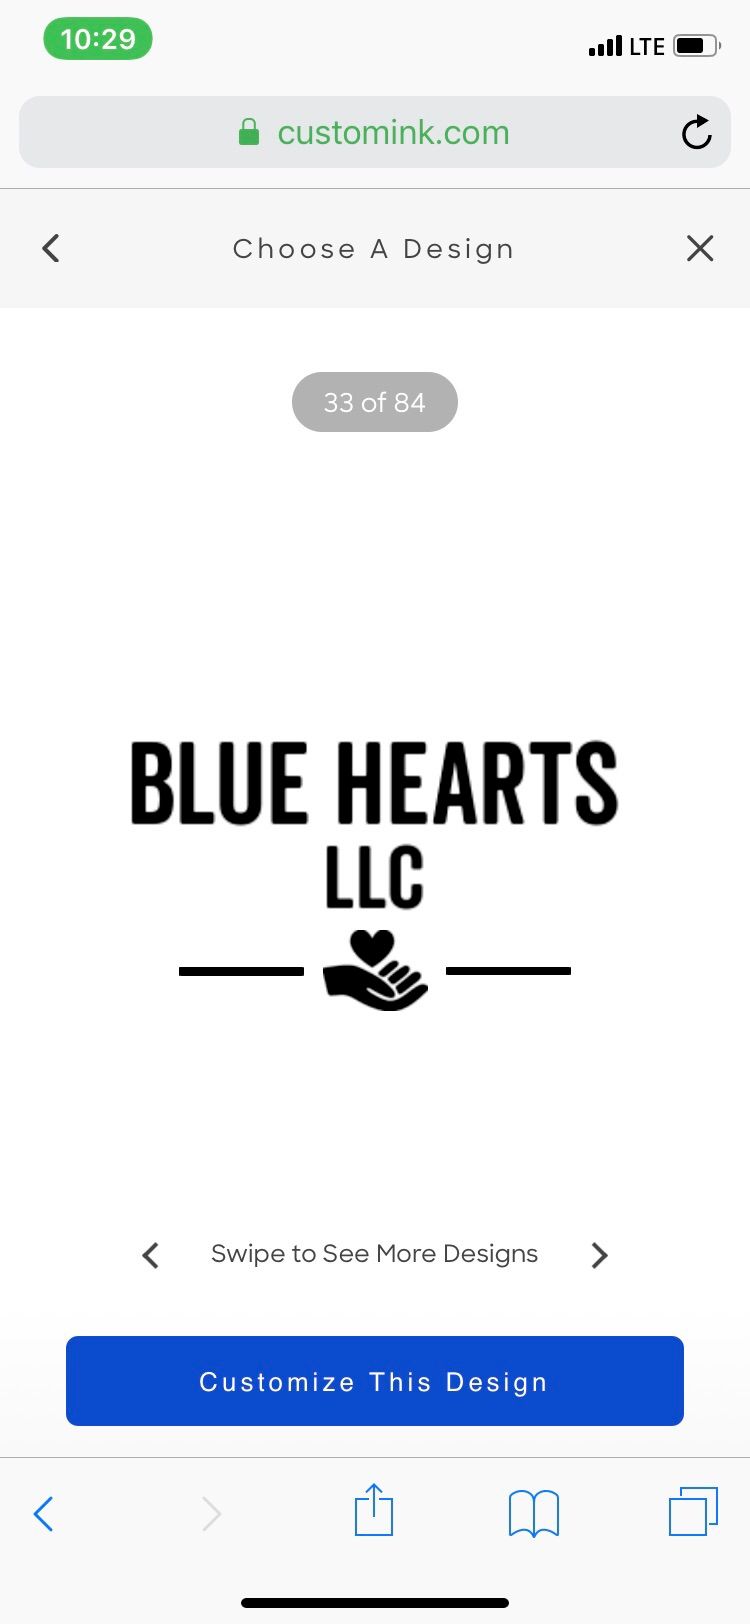 Blue hearts llc